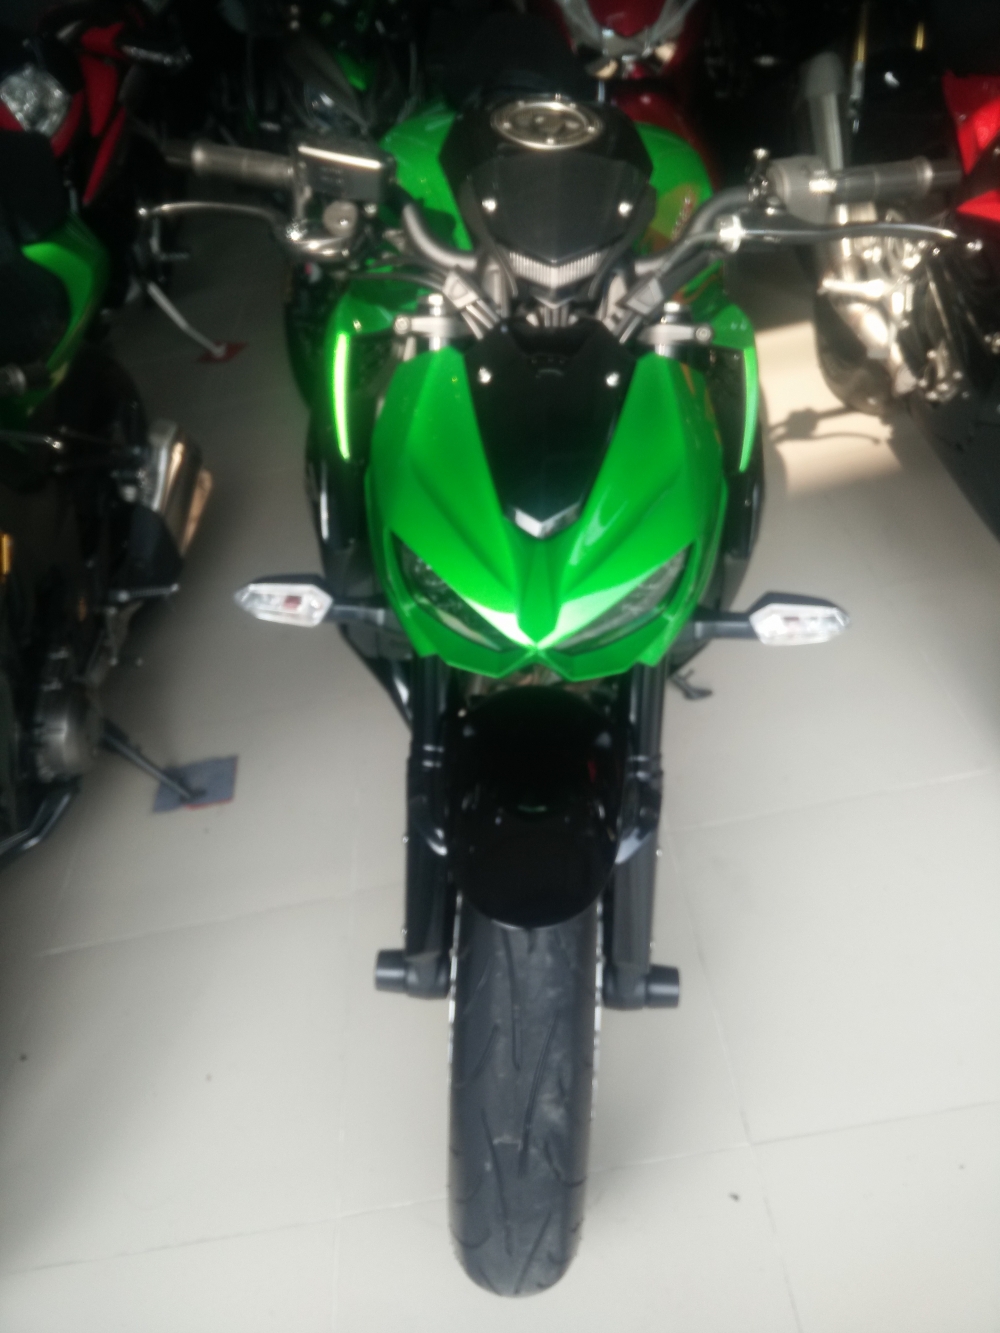 showroom MOTOR KEN z1000 than thanh 2015 xanh den xe cu bien vip - 4